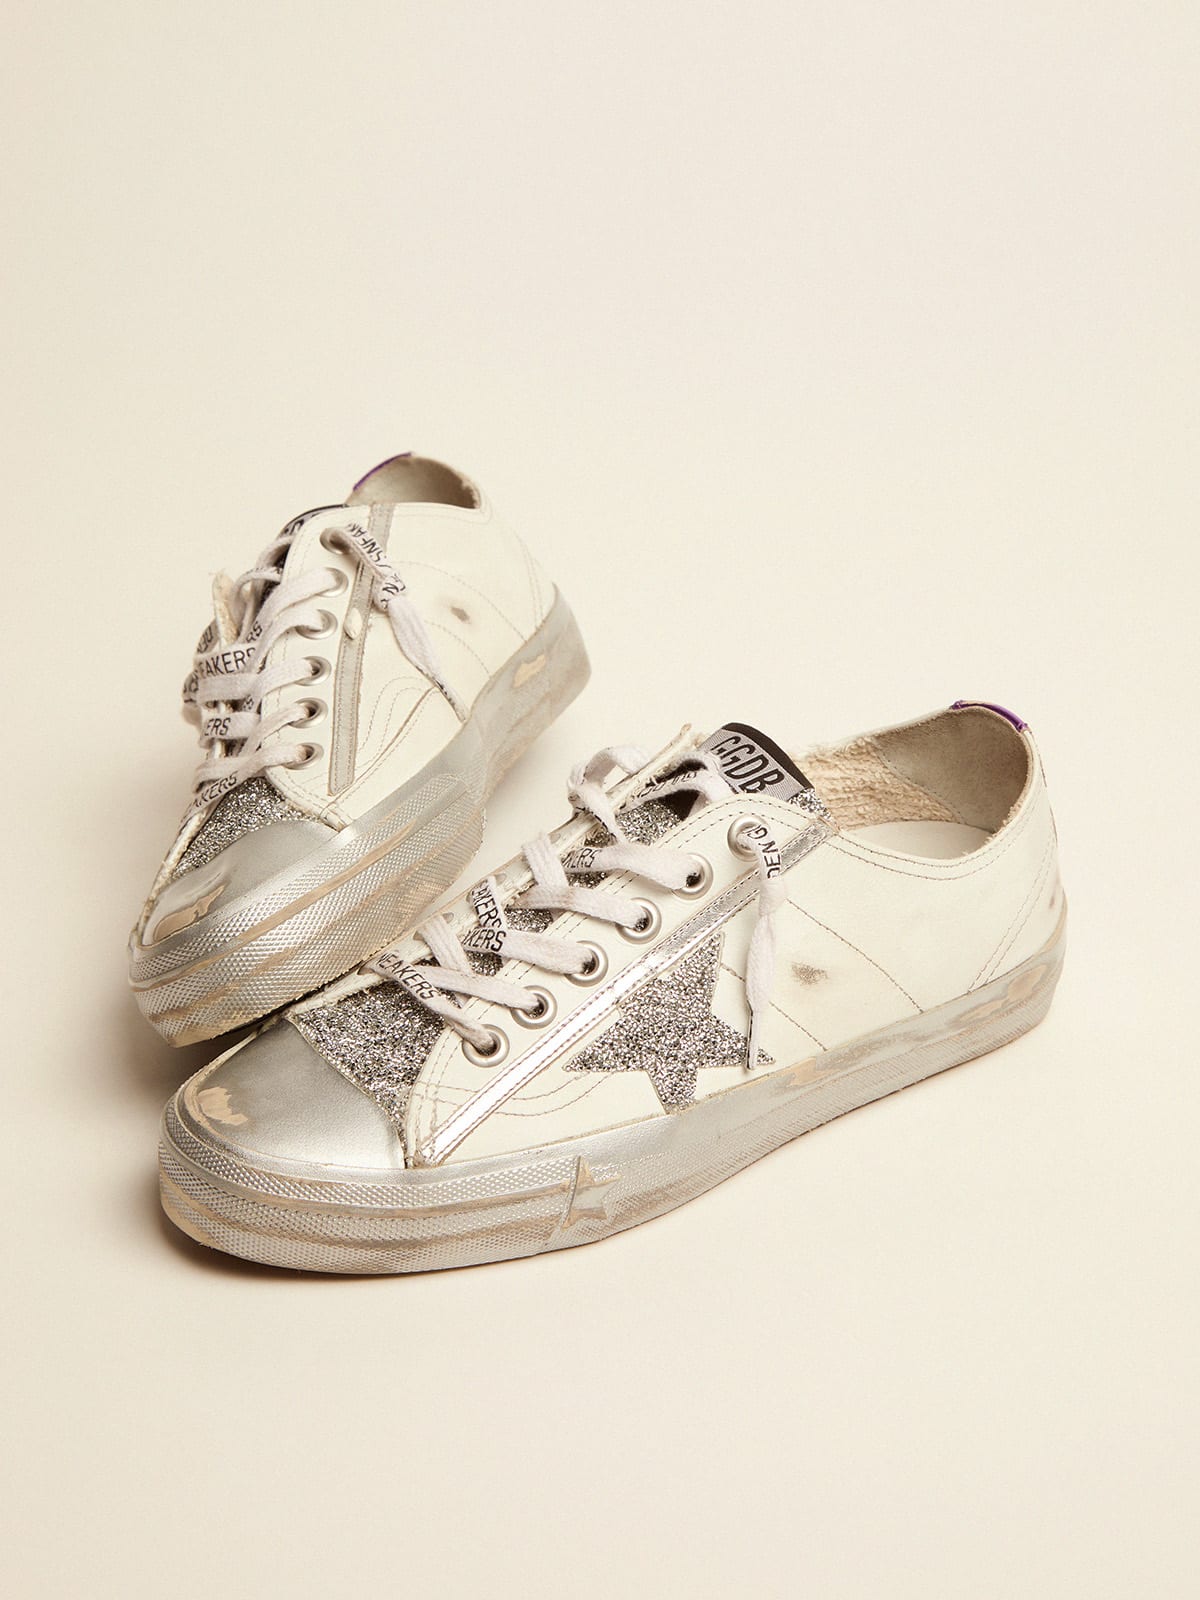 Golden Goose - V-Star LTD sneakers in white leather and Swarovski crystals in 